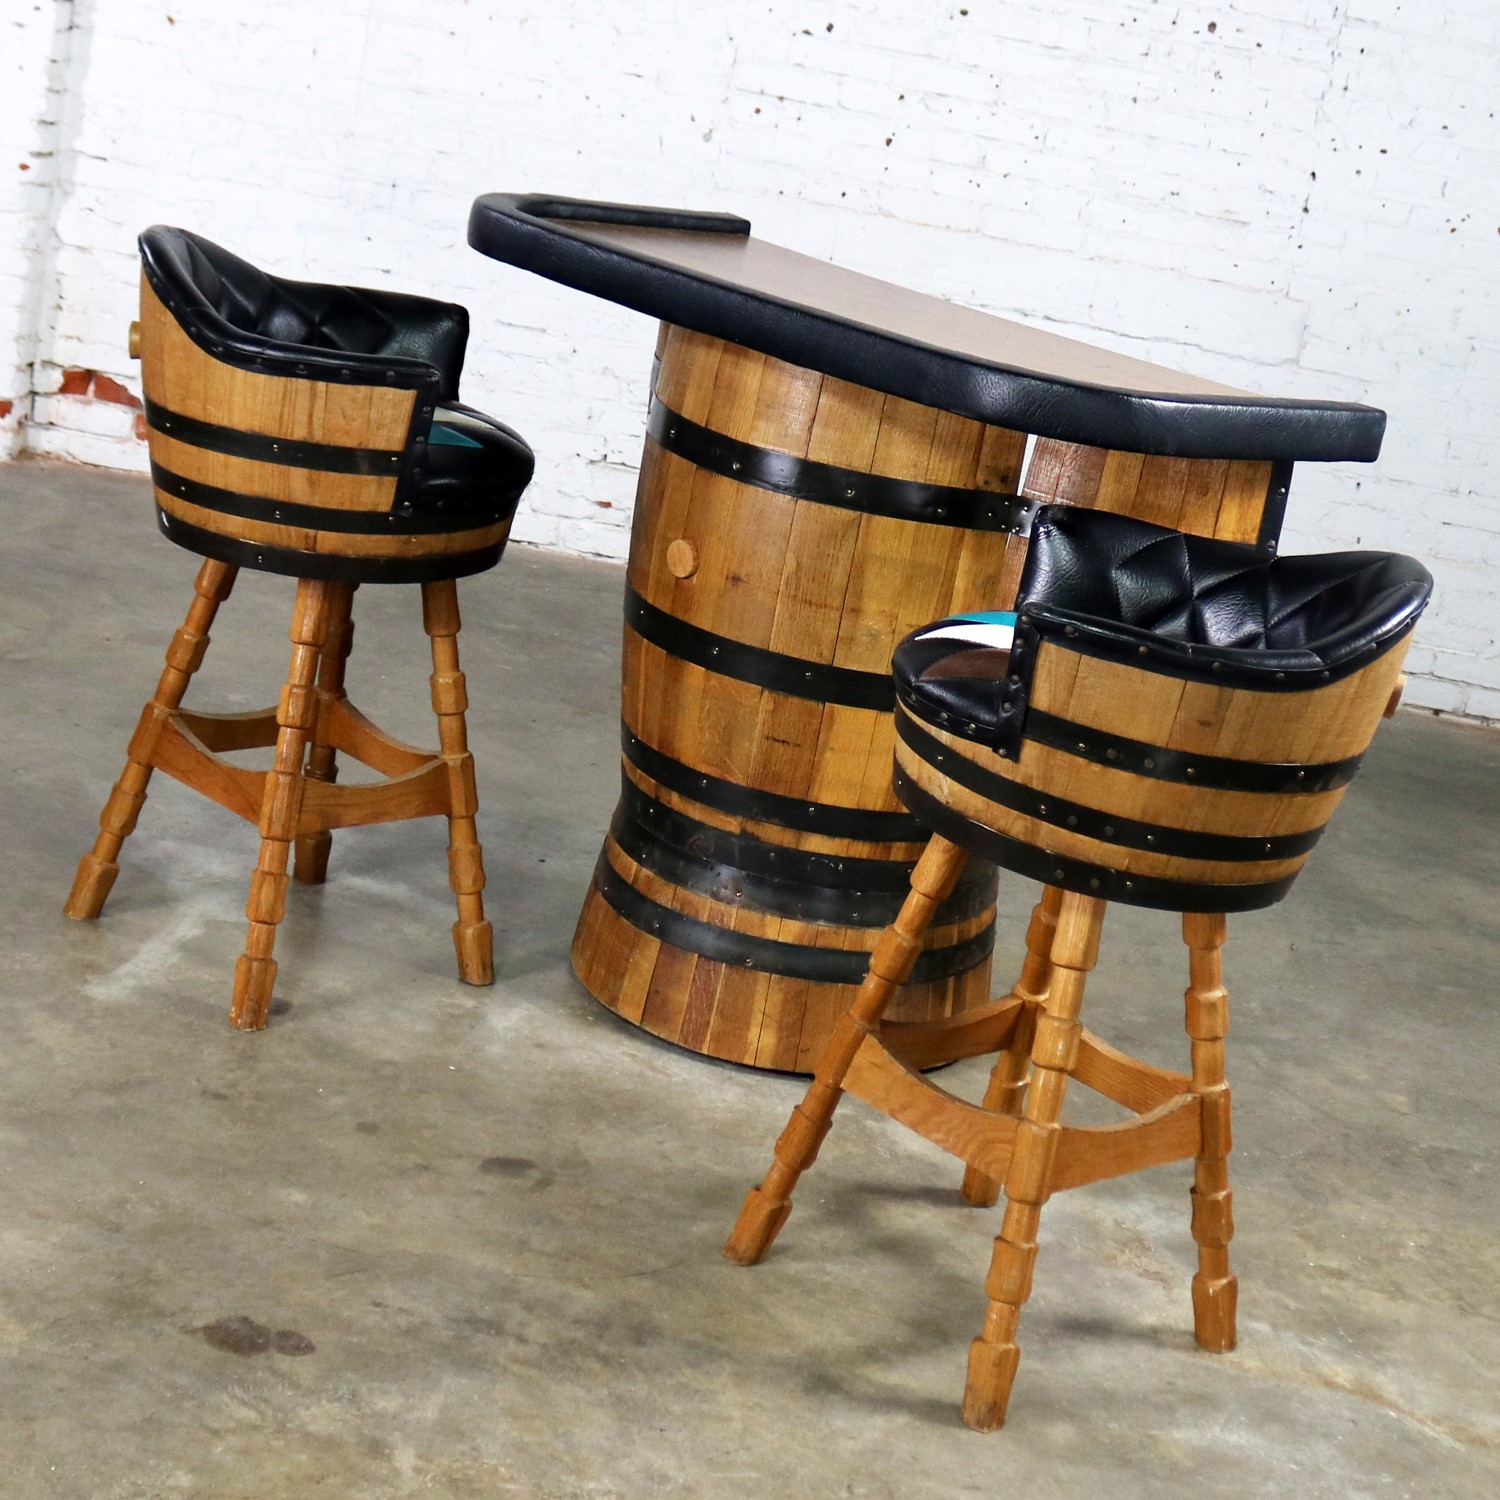 Tequila Barrel Bar Stools - Whiskey/Wine Barrel Bar Stools With Barrel seat back